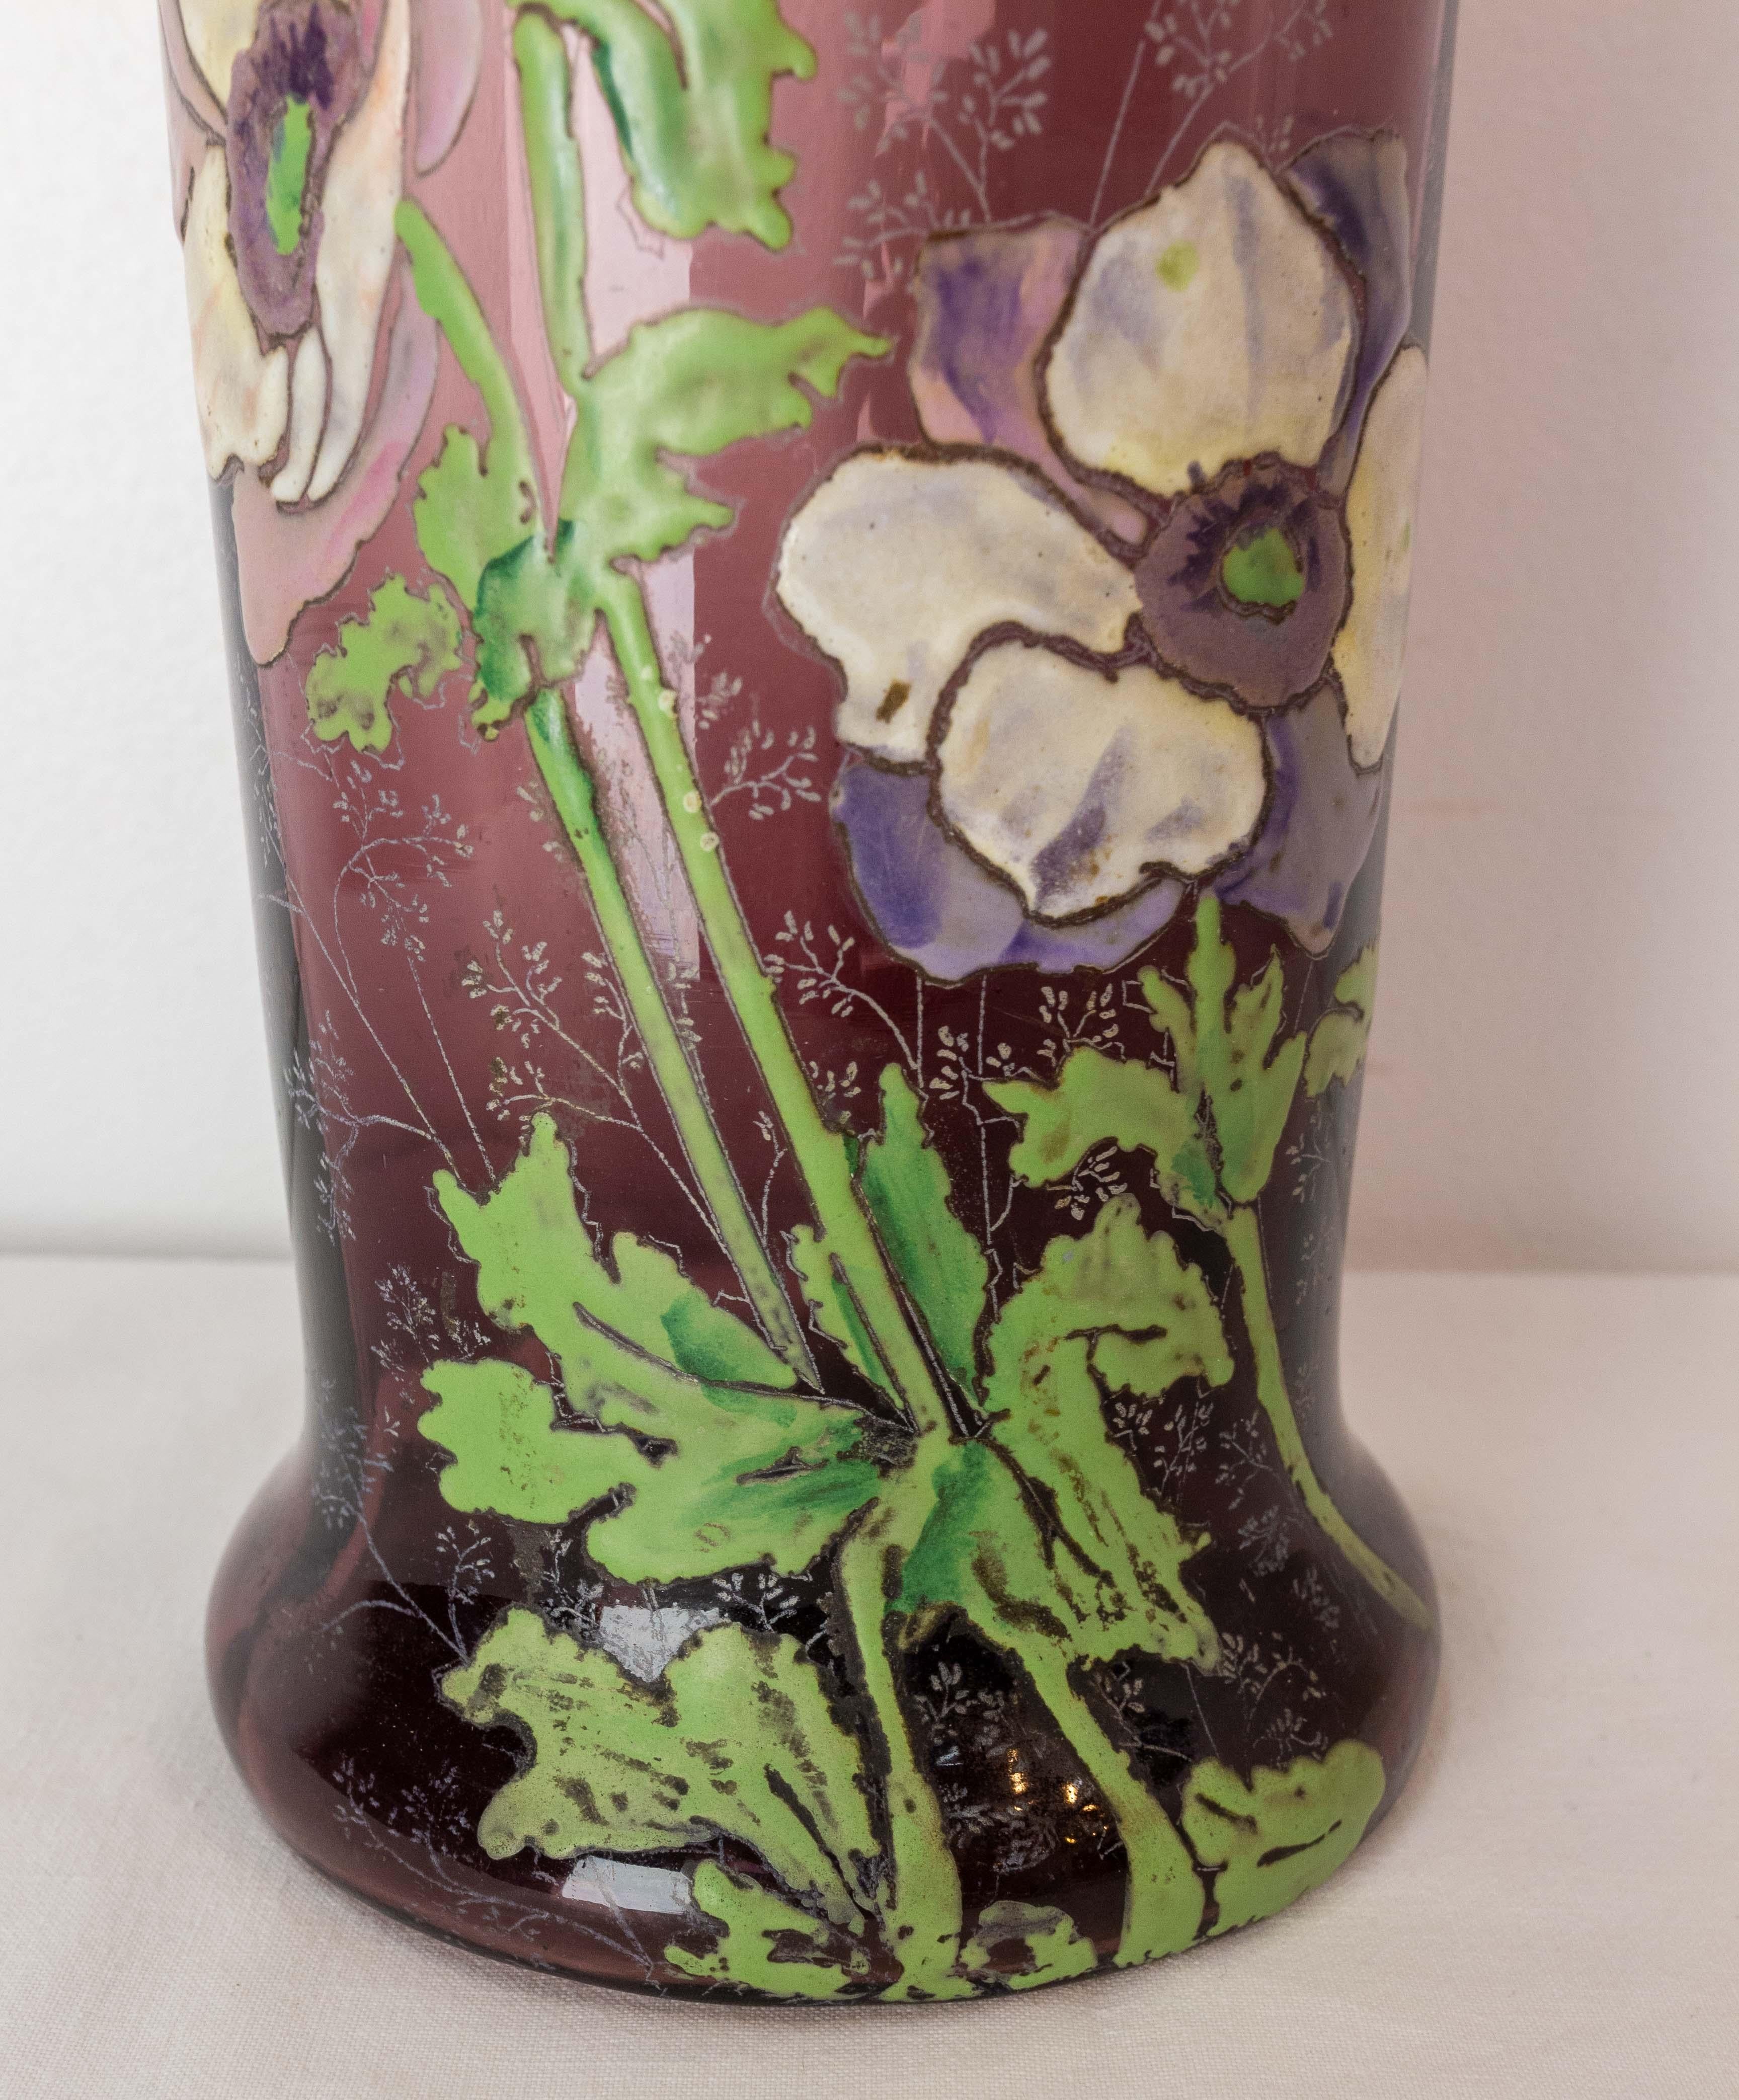 French Enamelled Glass Vase with Flowers Decoration Legras Art Nouveau, c. 1900 For Sale 3